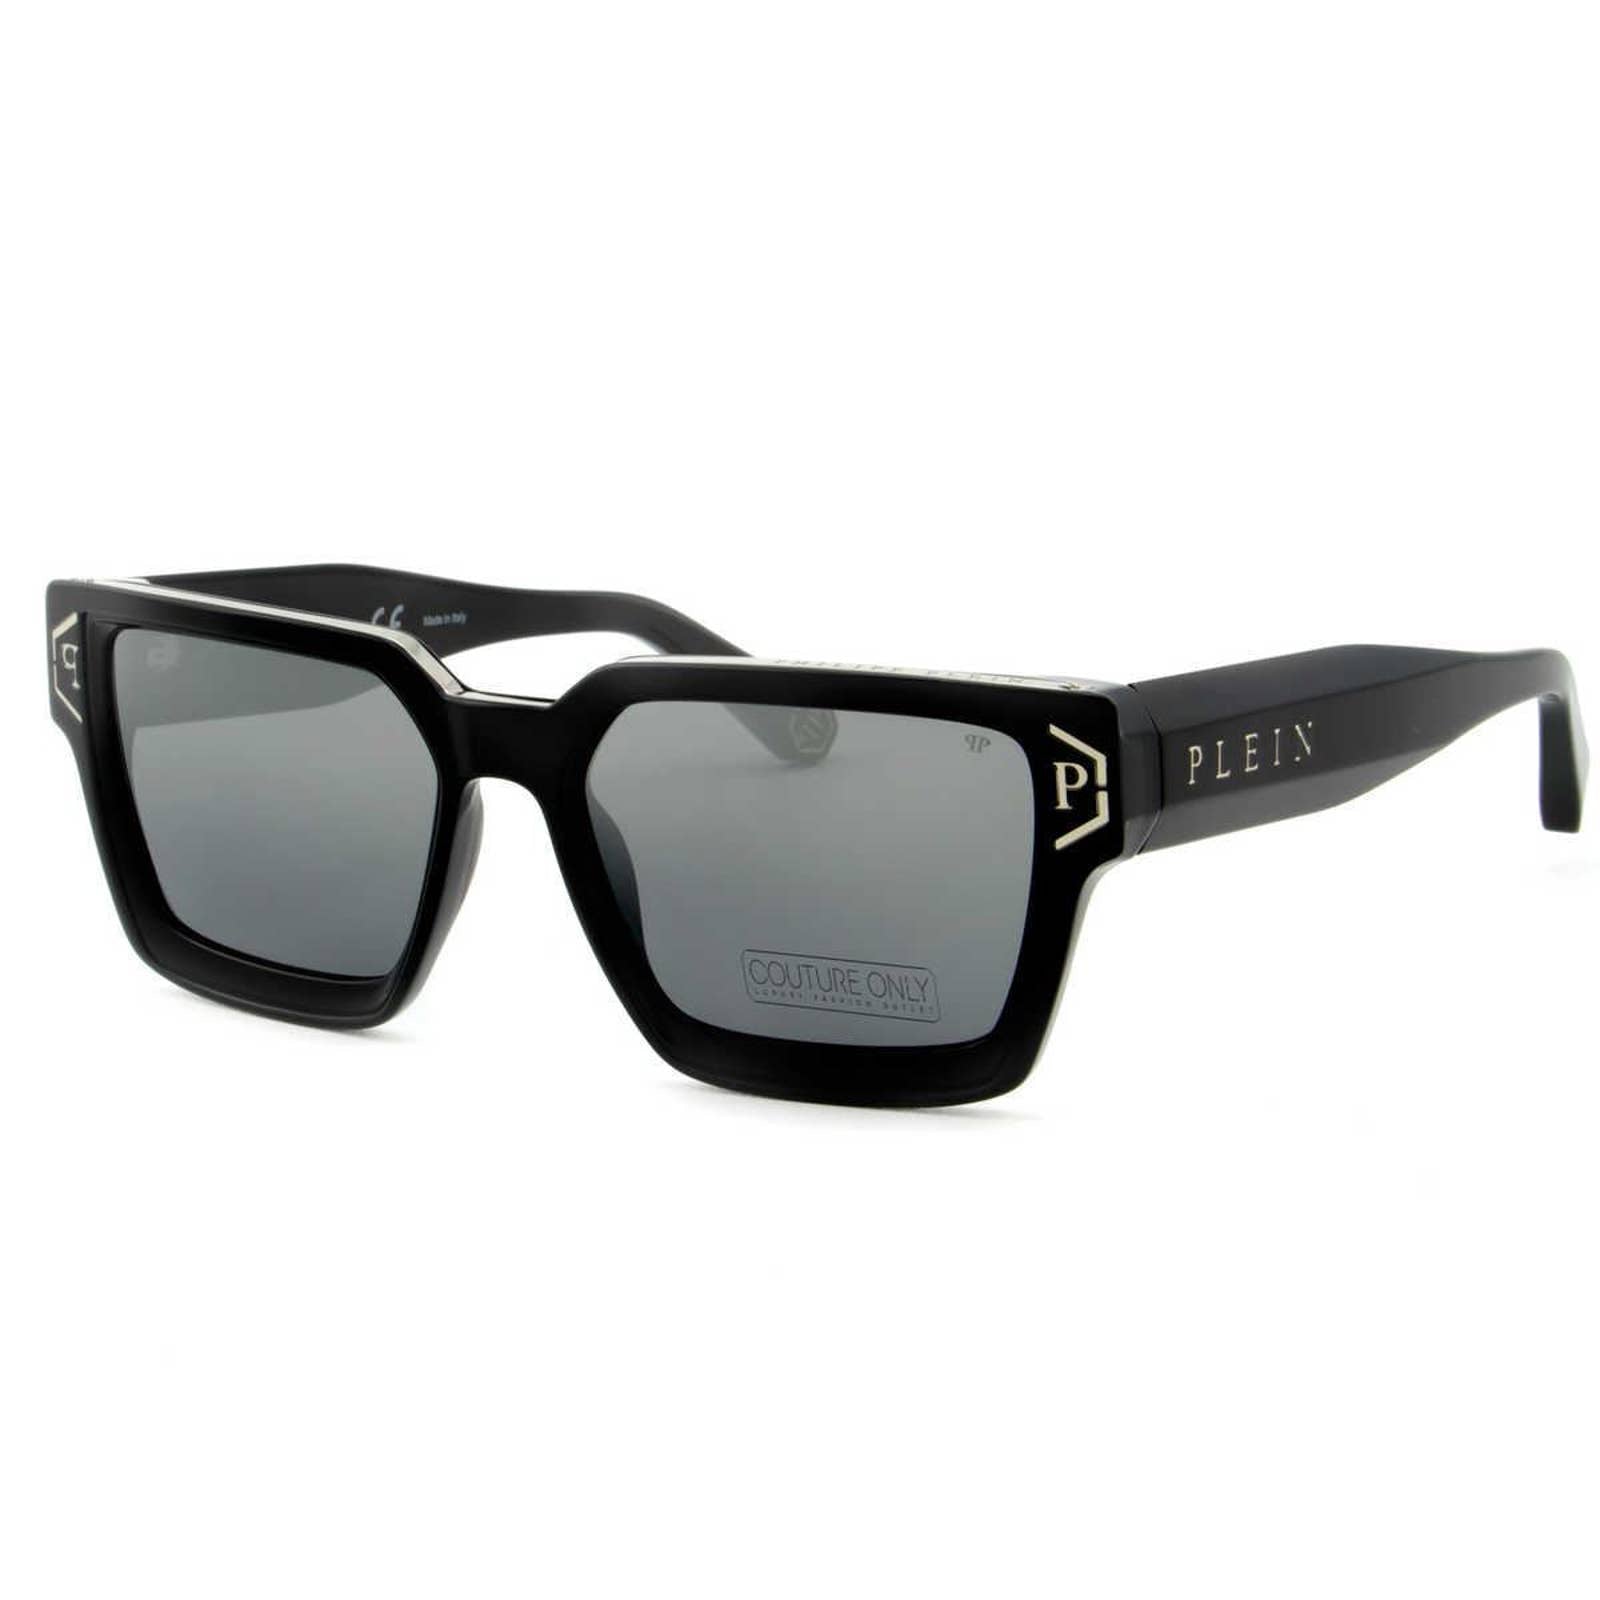 Men Black Square Sunglasses SPP005M-700X Black & Silver